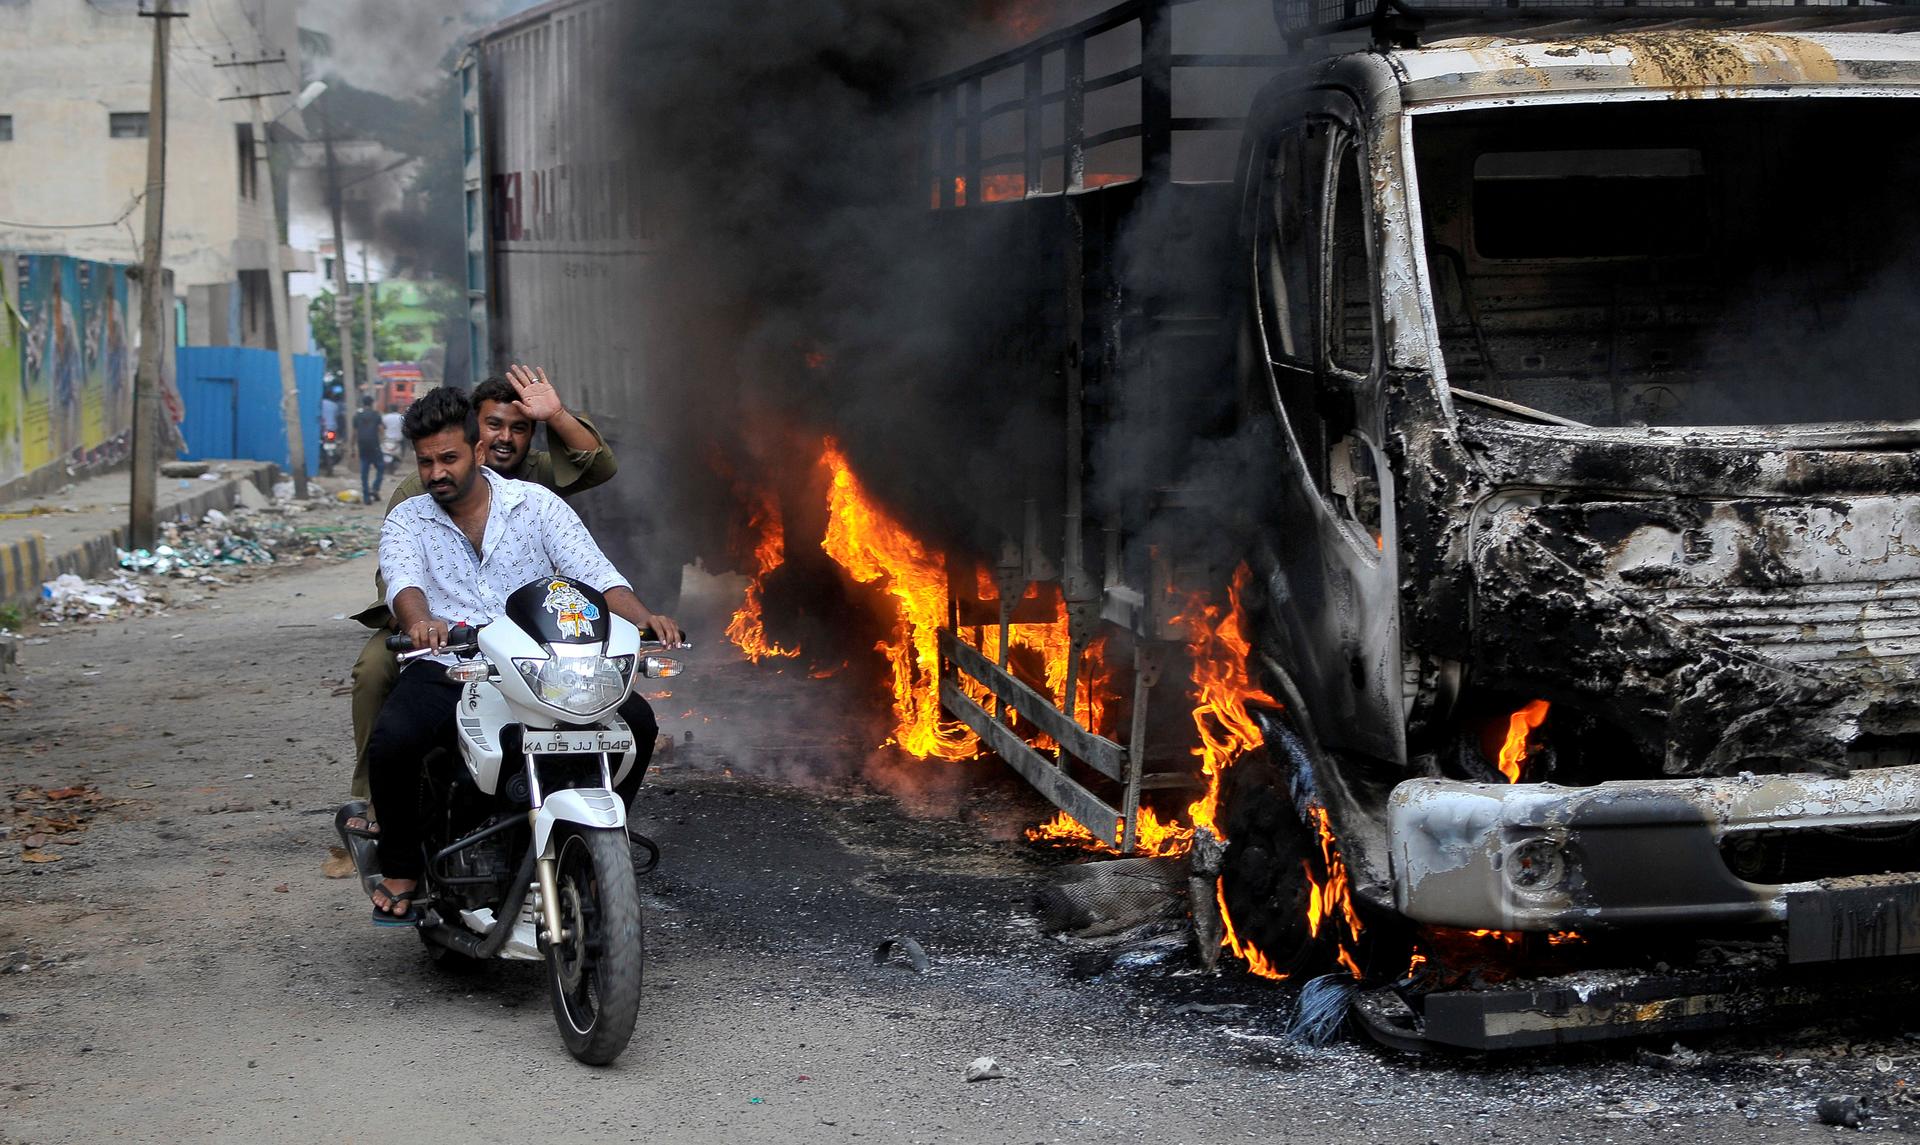 Burned bus in Bengaluru, India